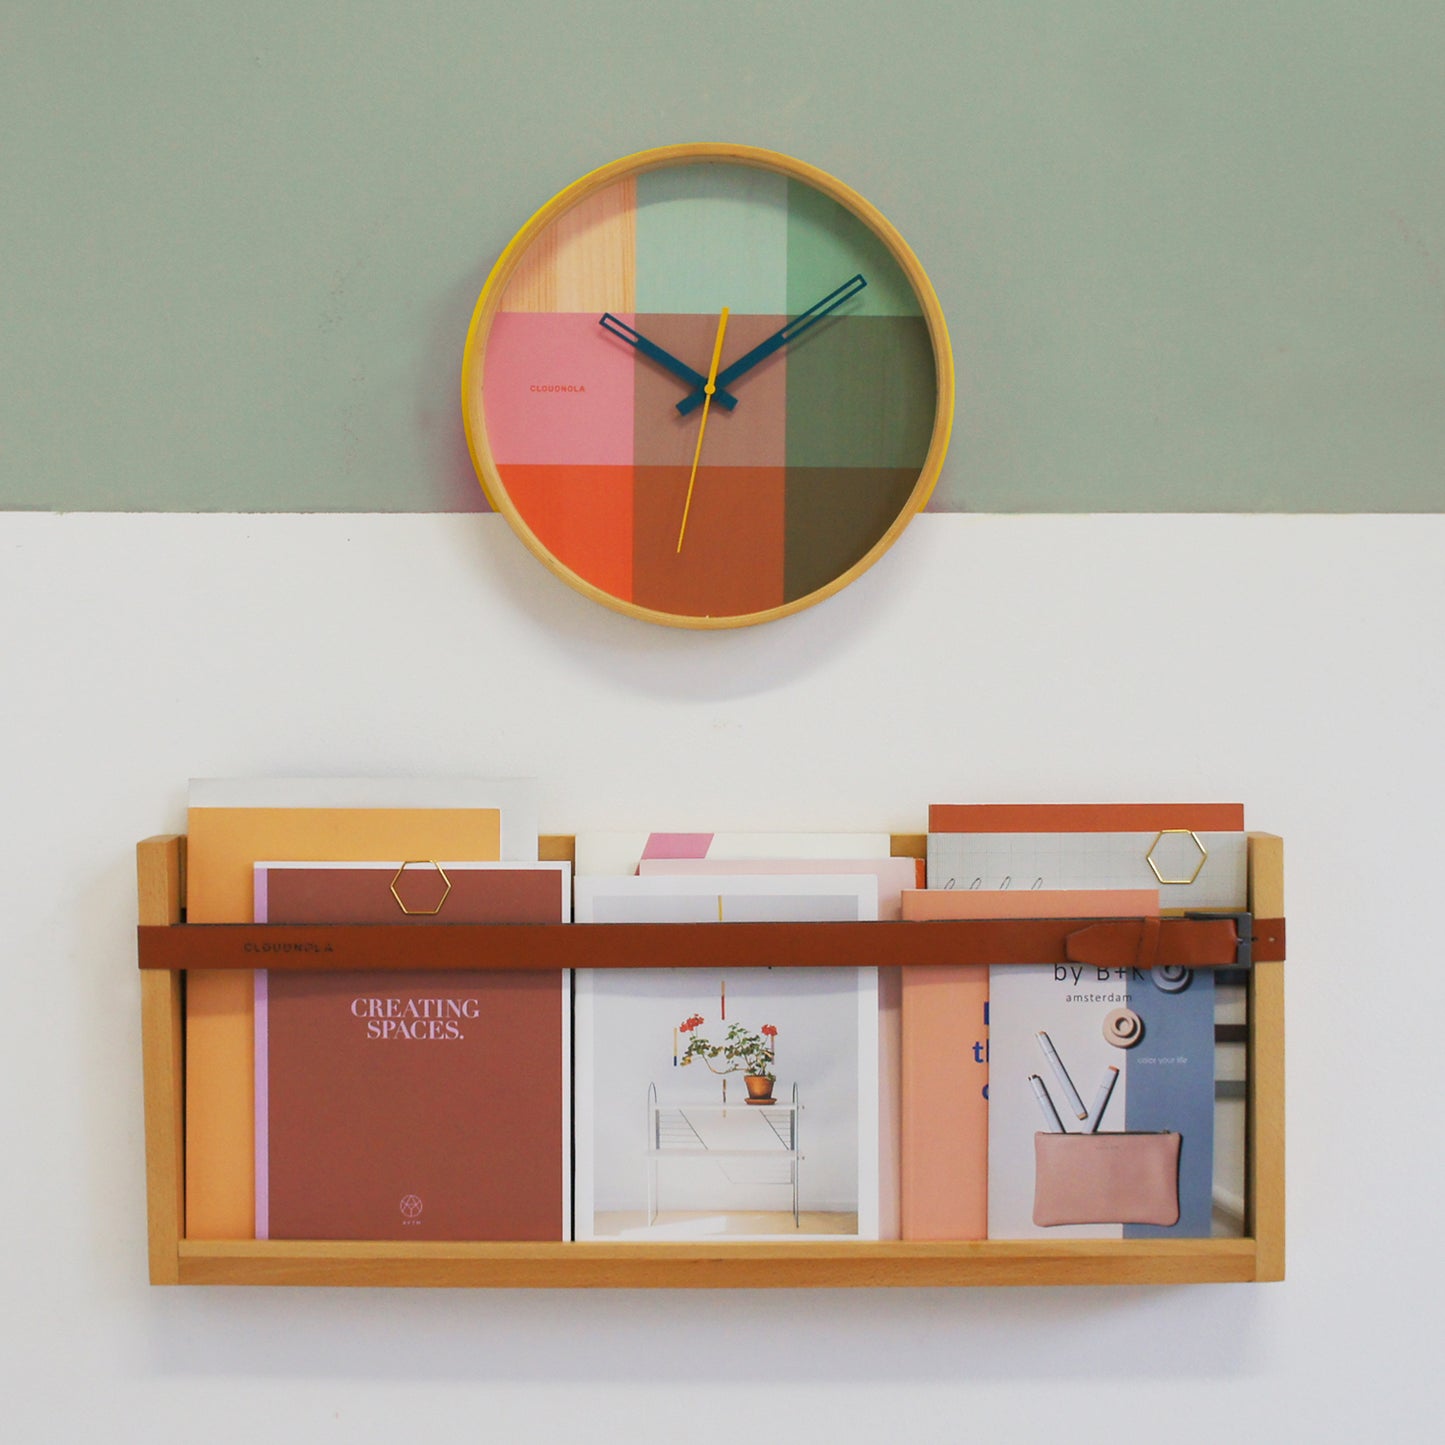 Riso Green & Pink Wall Clock - Wooden Casing - Artistic Timepiece